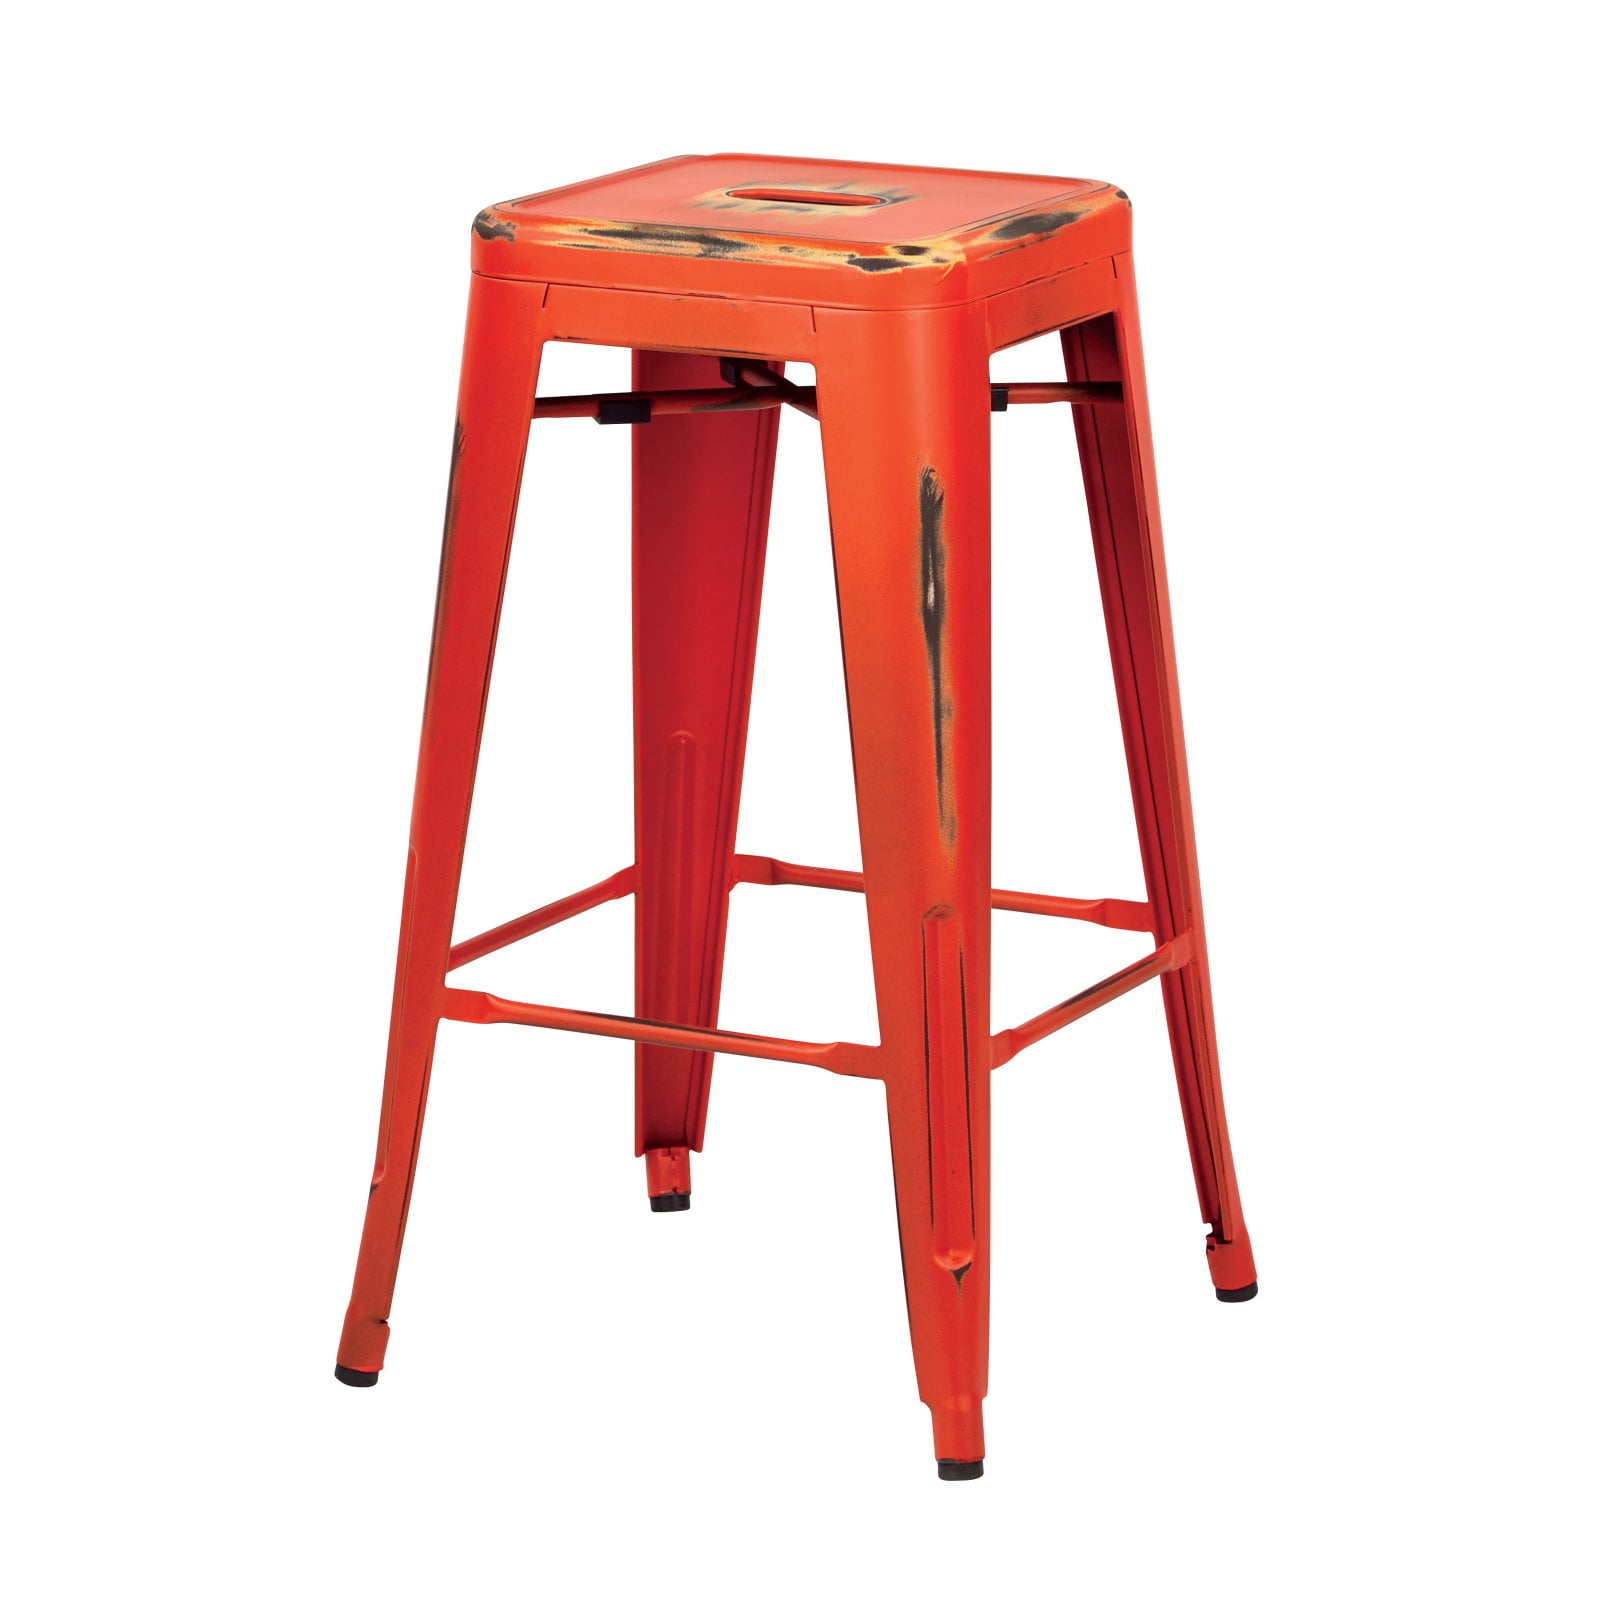 Angel Line 43418-21 Cambridge bar stools 24 Set of 1 Espresso w/Dark Red Cushion and Adhesives Floor Protector